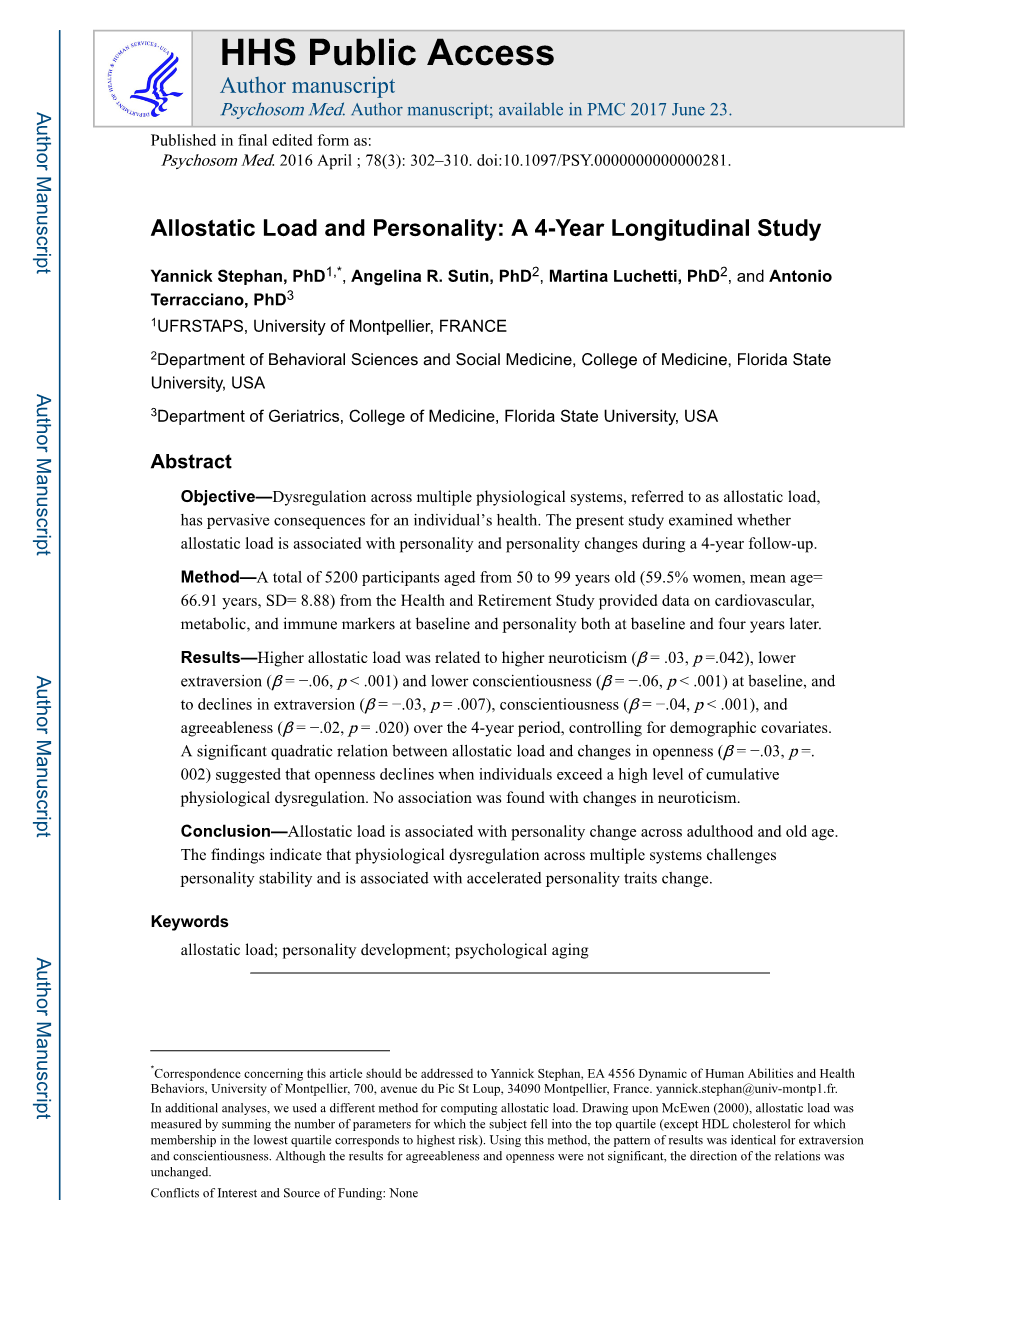 Allostatic Load and Personality: a 4-Year Longitudinal Study